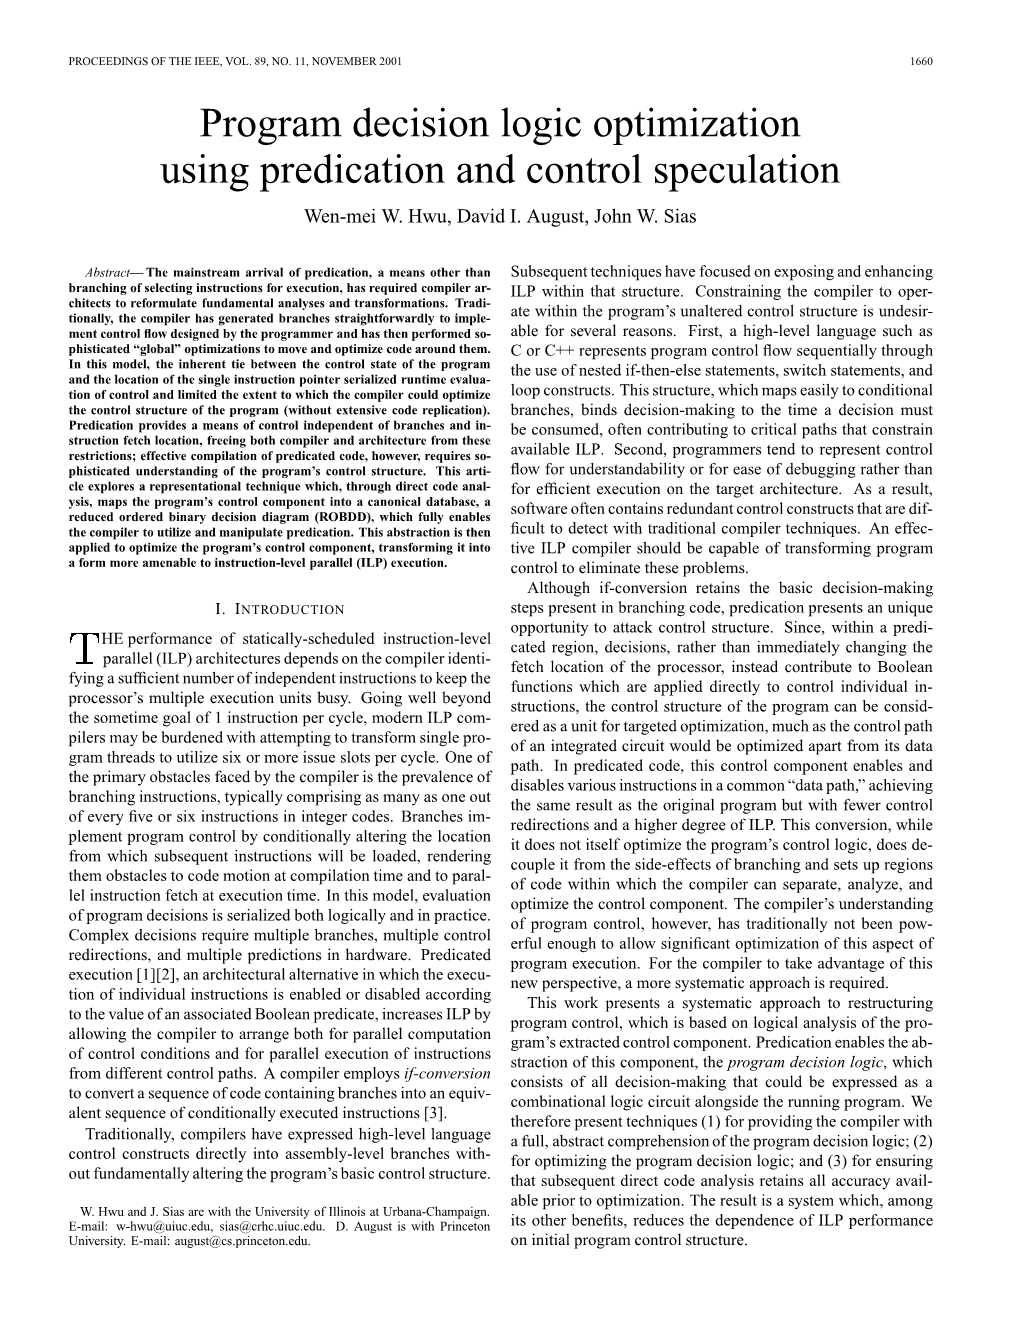 Program Decision Logic Optimization Using Predication and Control Speculation Wen-Mei W